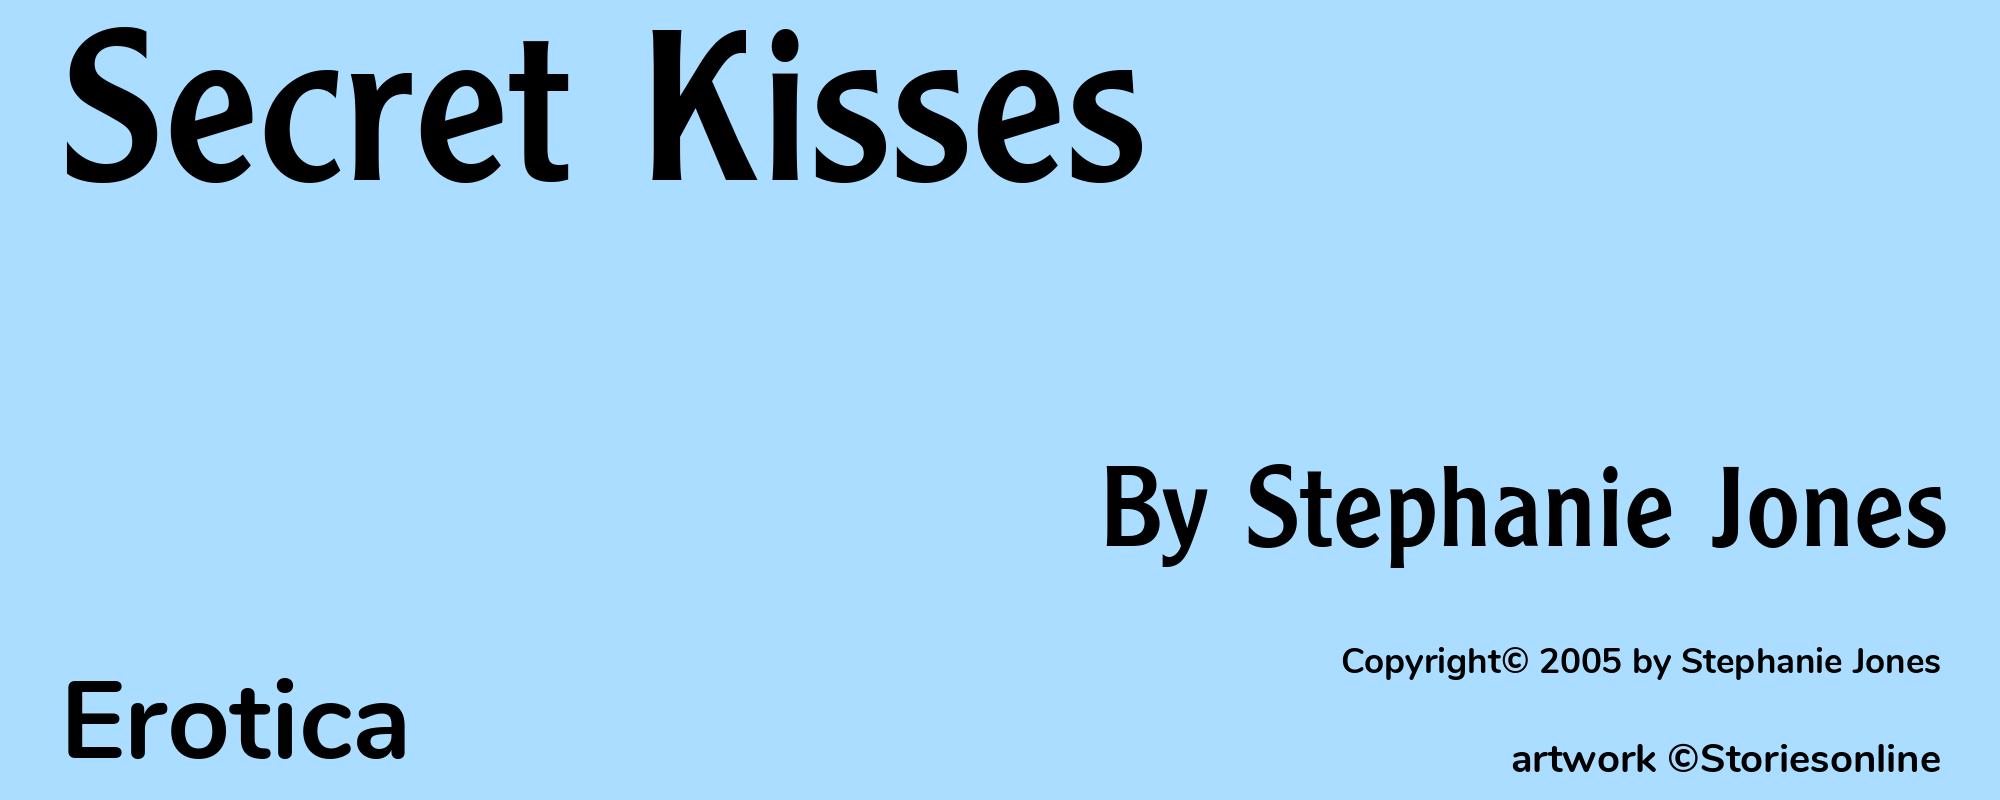 Secret Kisses - Cover